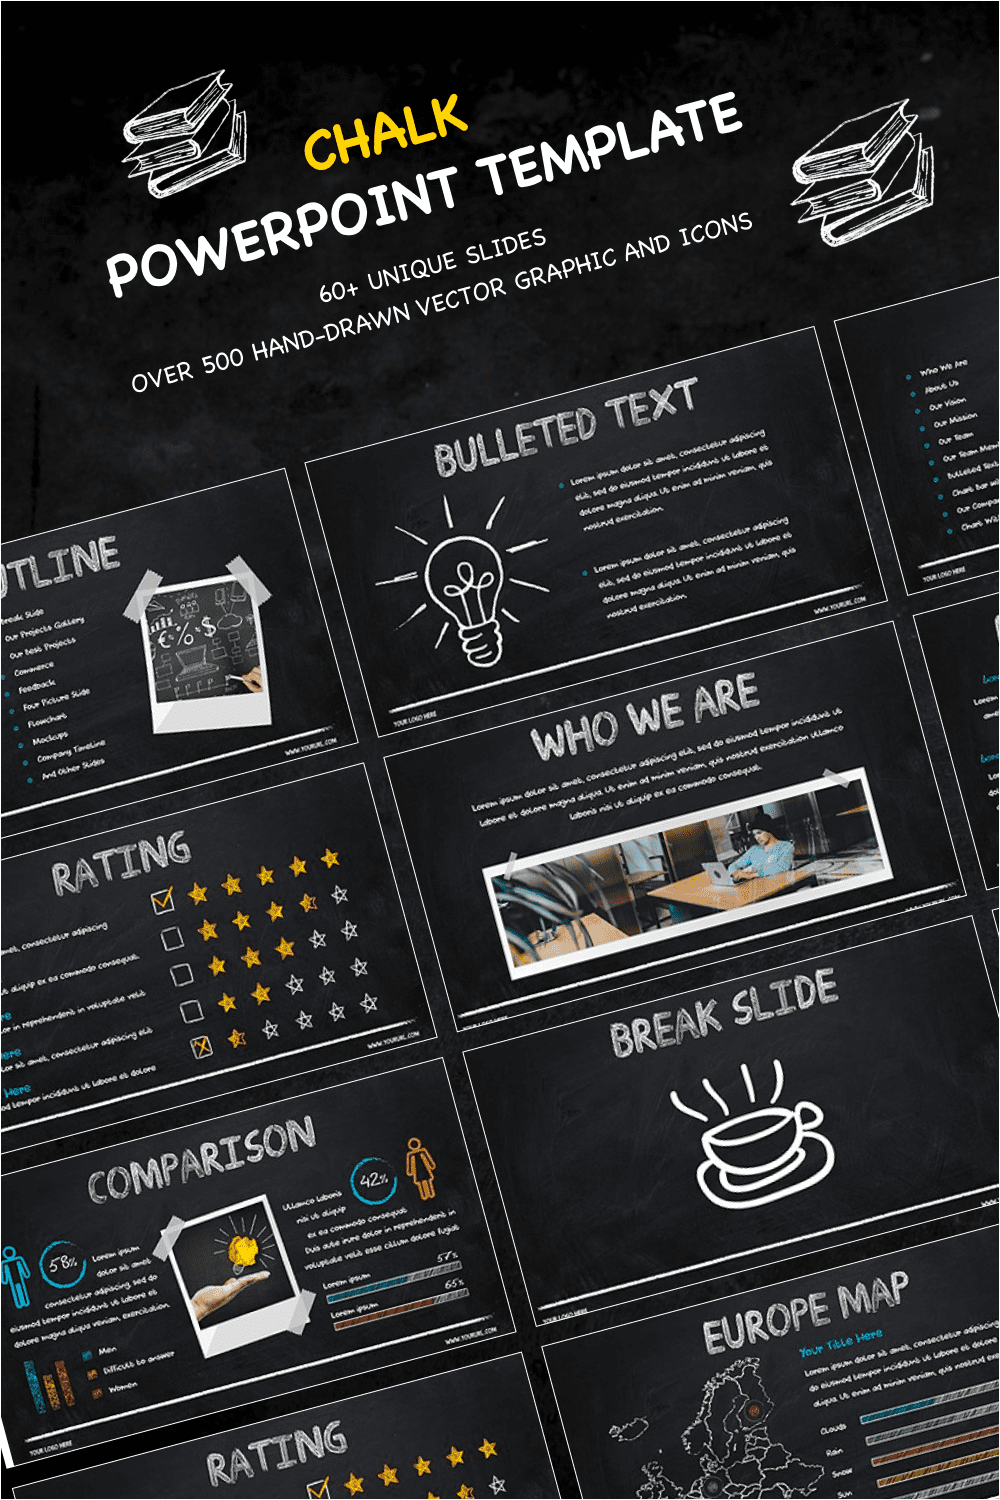 Chalk - Powerpoint Template by MasterBundles Pinterest Collage Image.